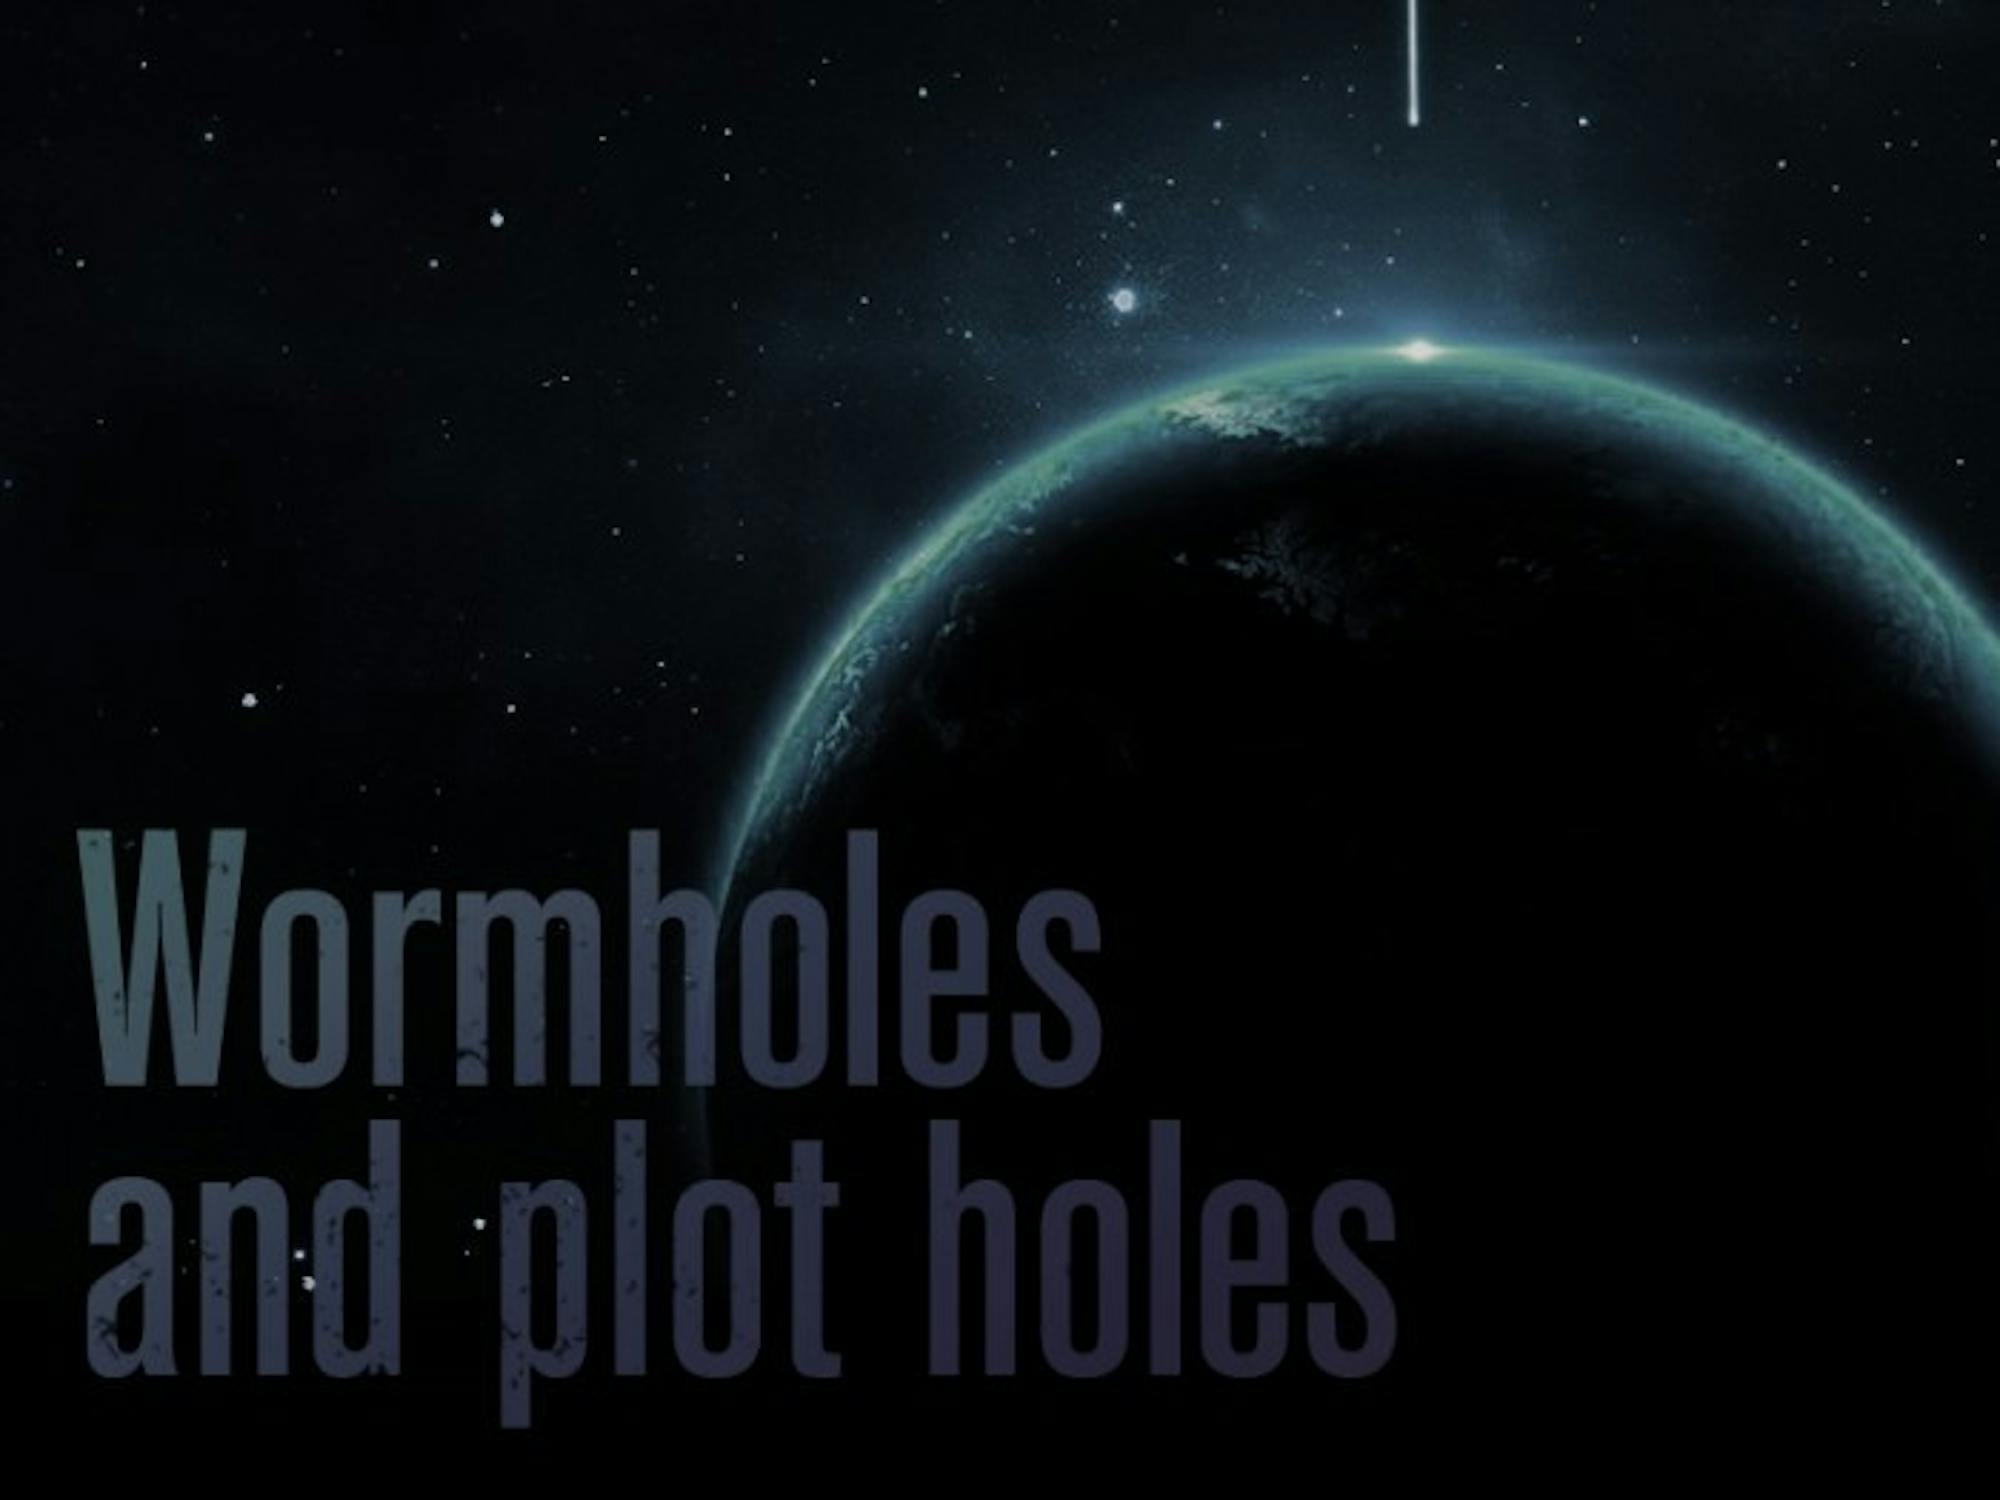 web_wormholes and potholes_11-13-2014